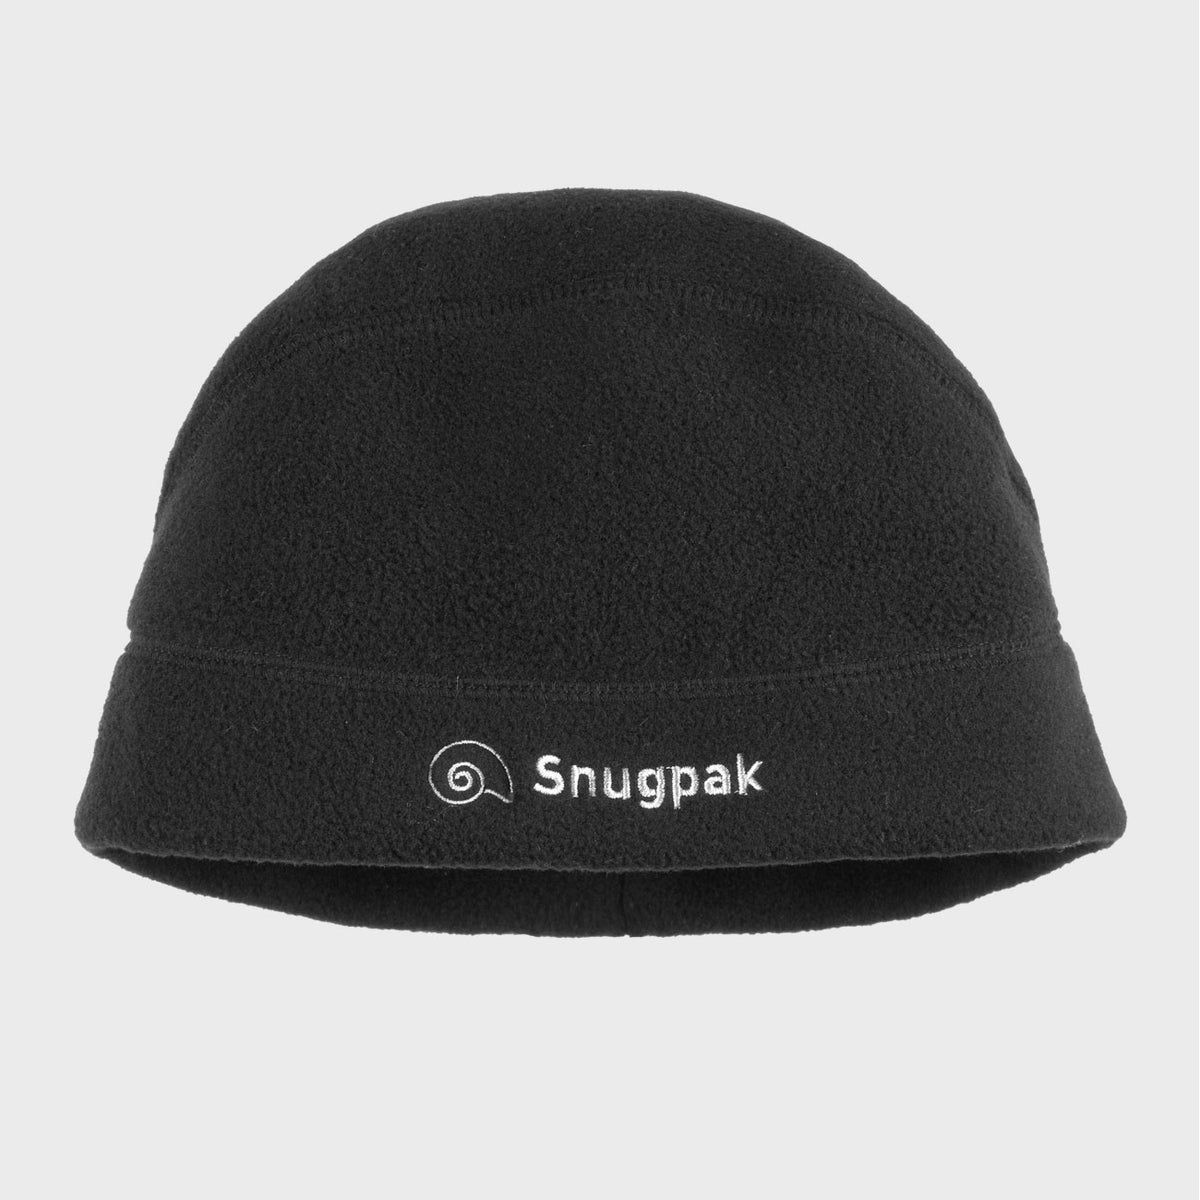 www.snugpak.com